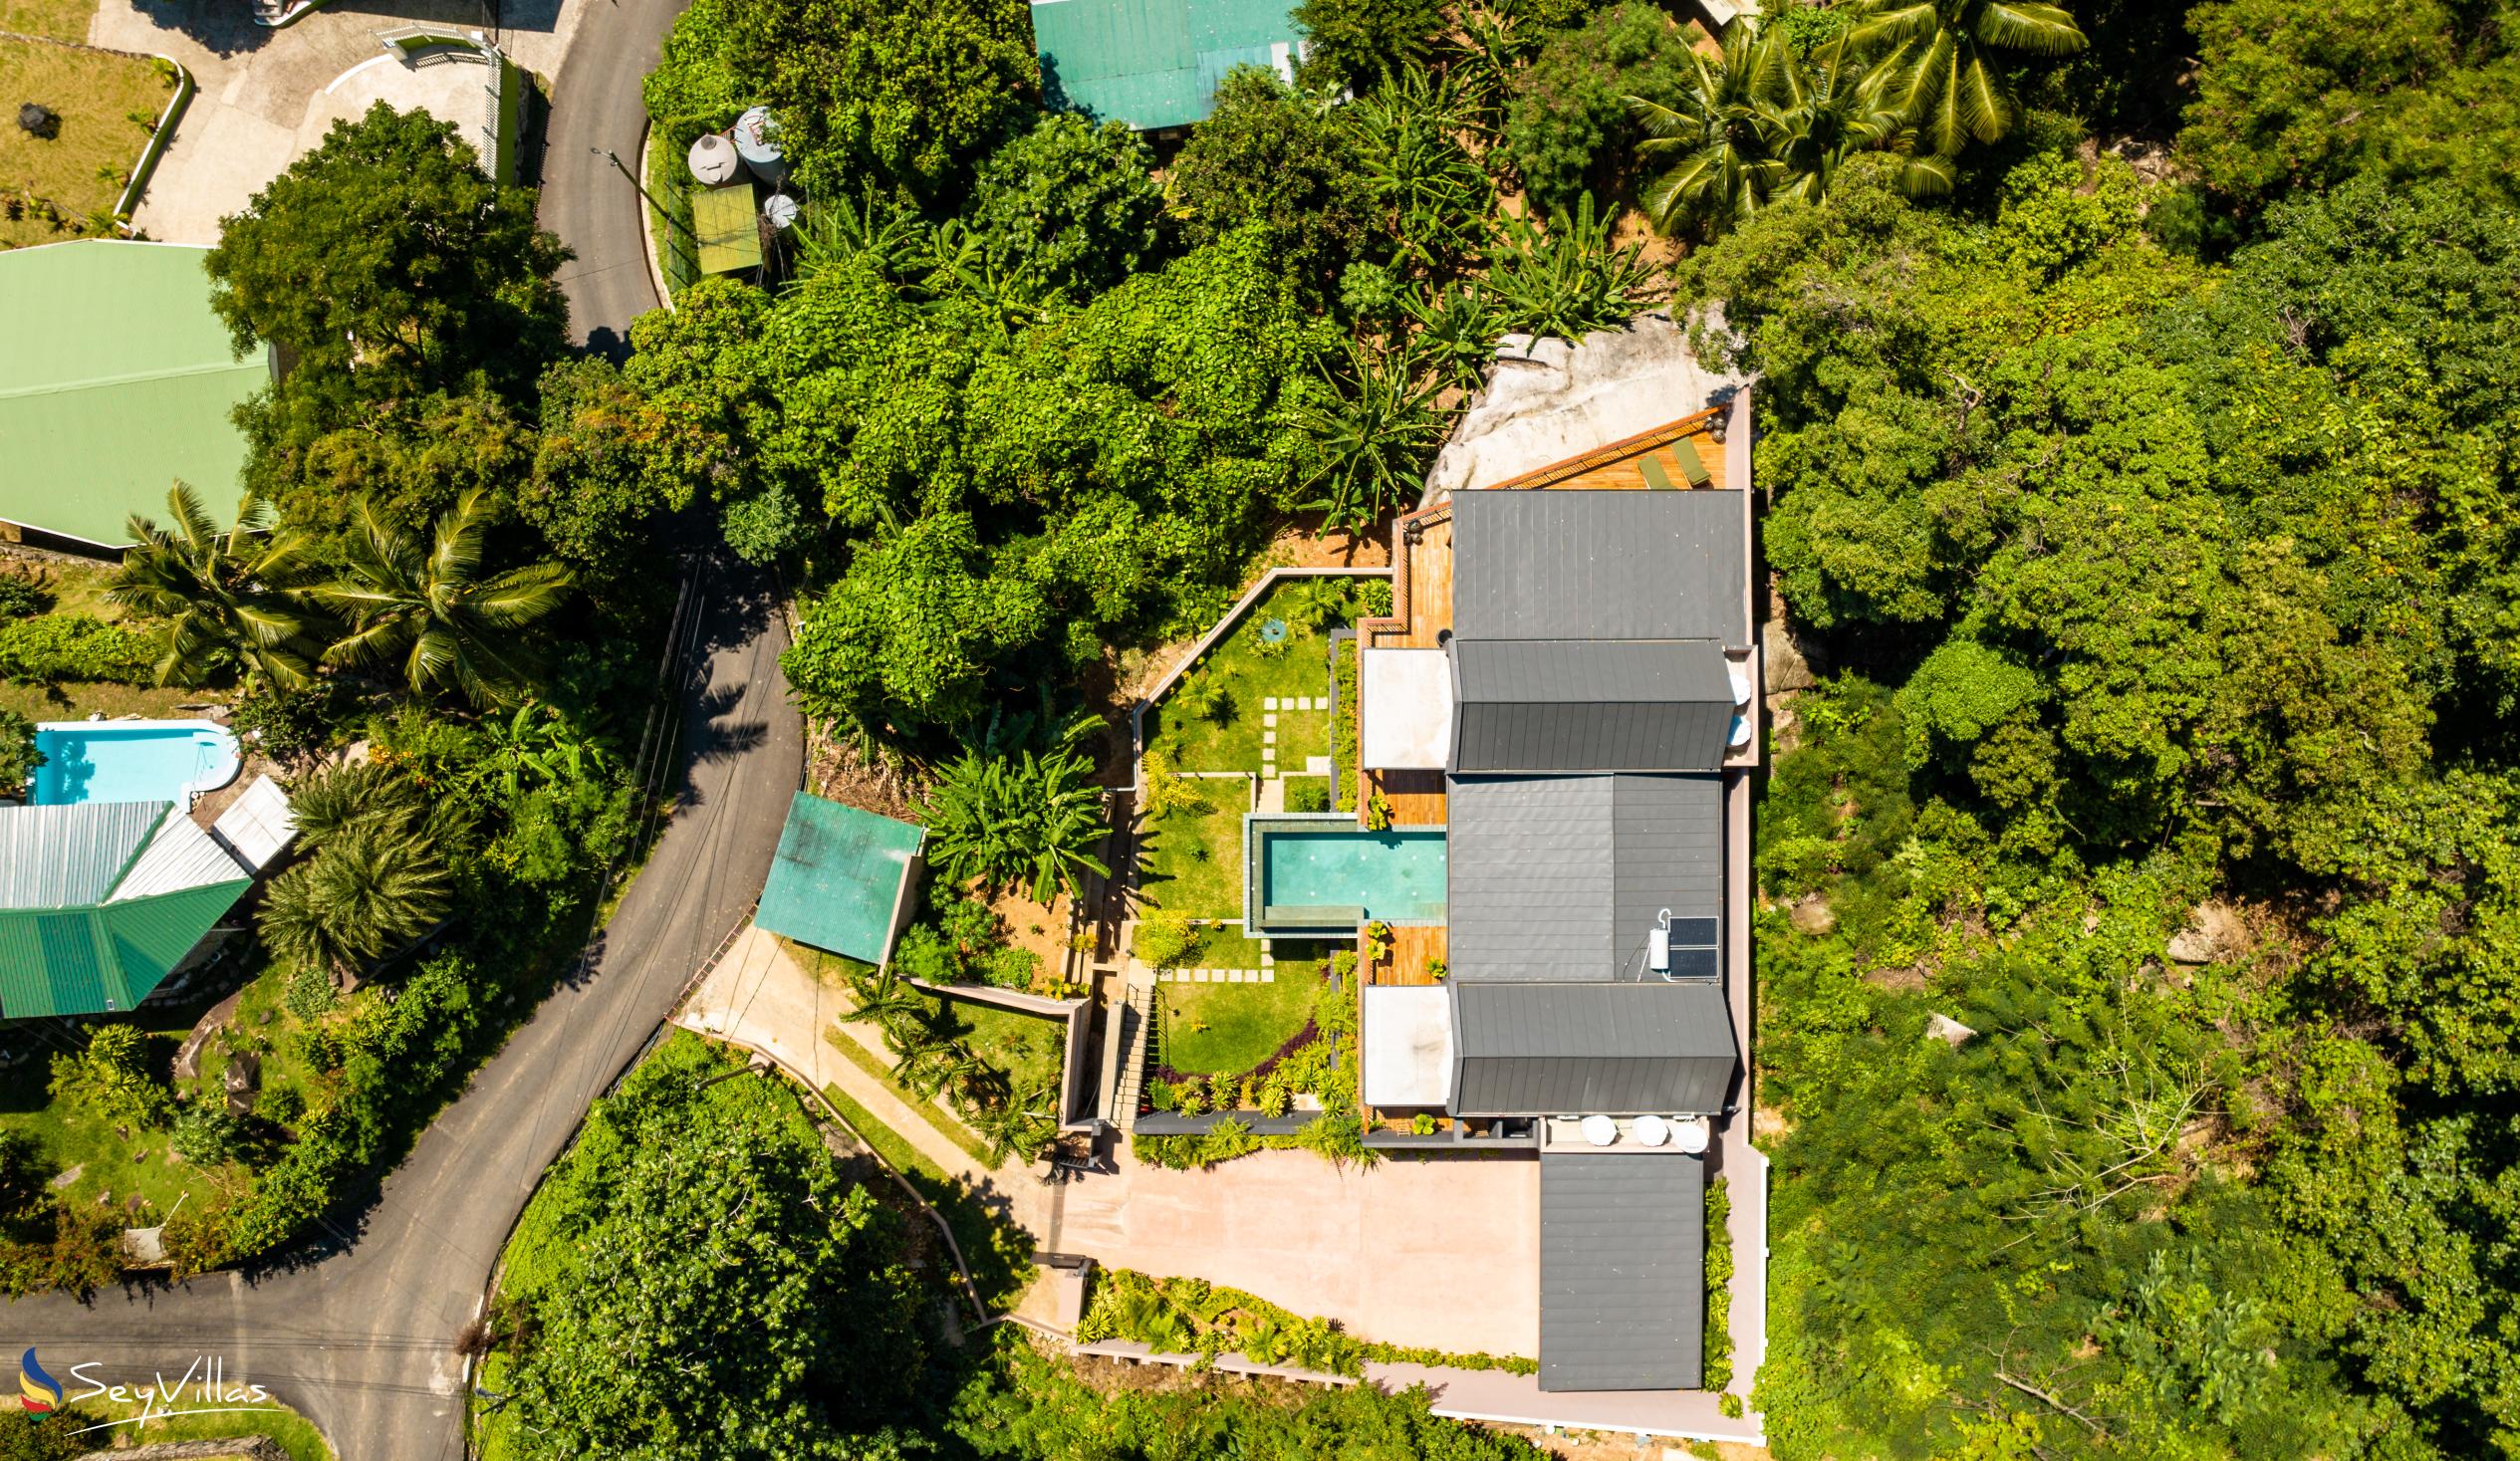 Photo 13: Maison Gaia - Outdoor area - Mahé (Seychelles)